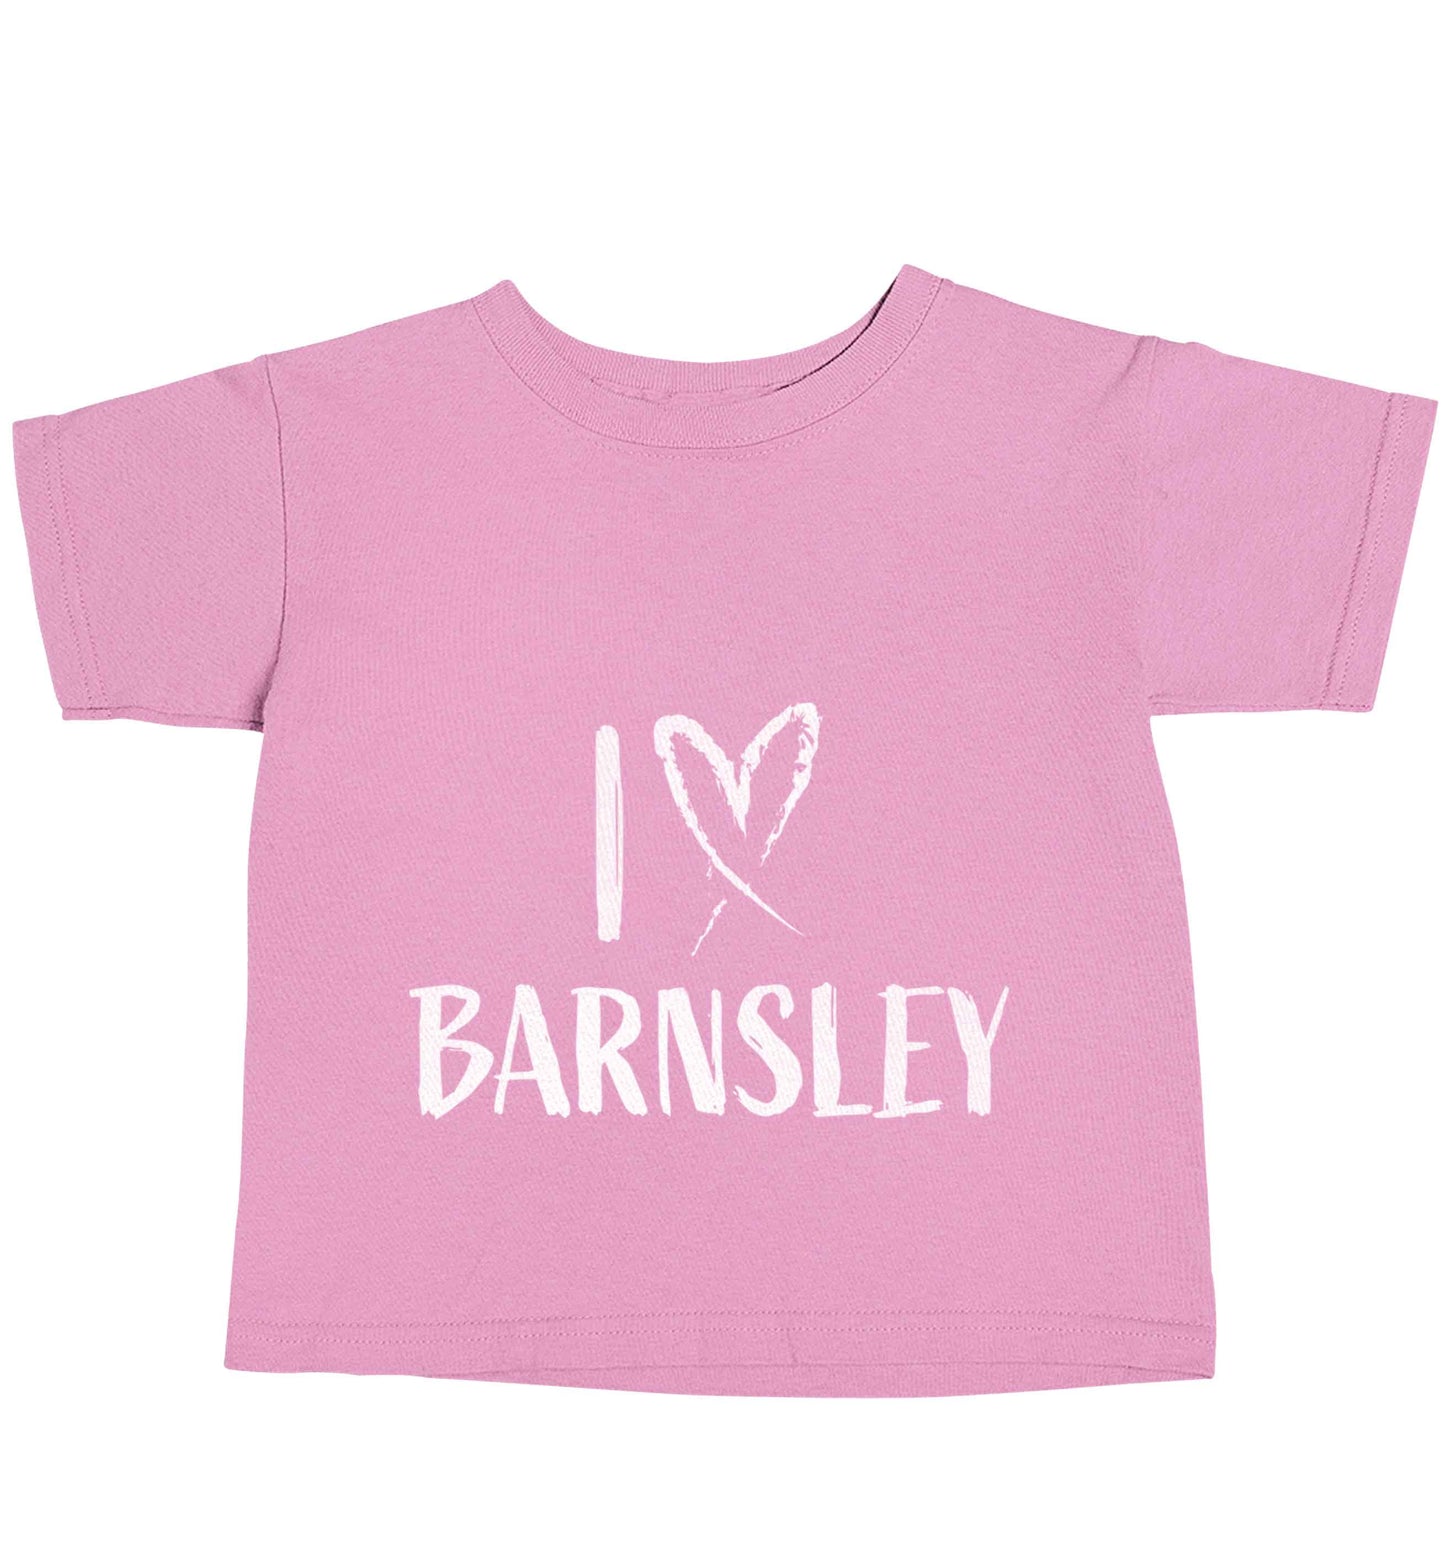 I love Barnsley light pink baby toddler Tshirt 2 Years